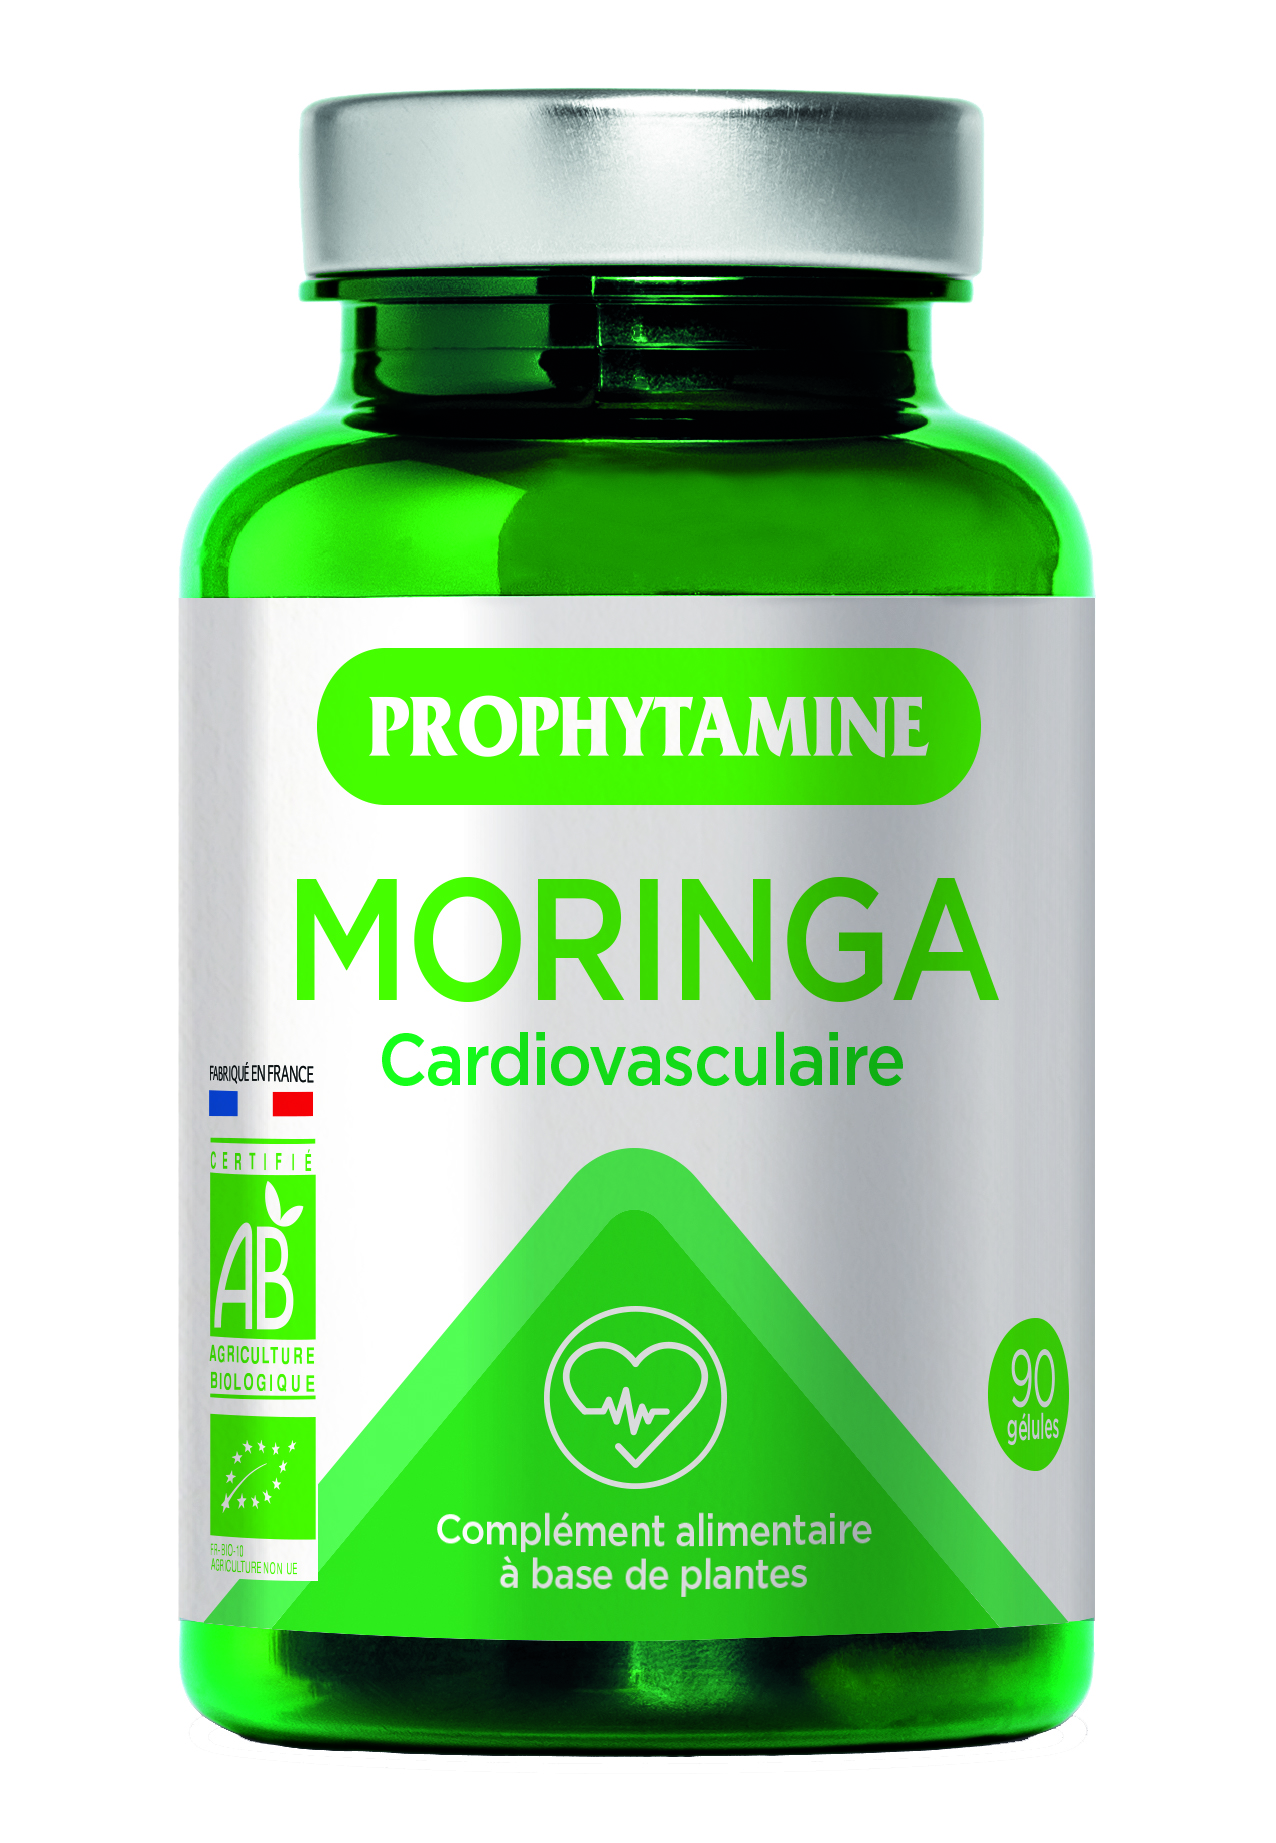 Cardiovasculaire - Moringa 9 X 90 G L - PROPHYTAMINE BIO